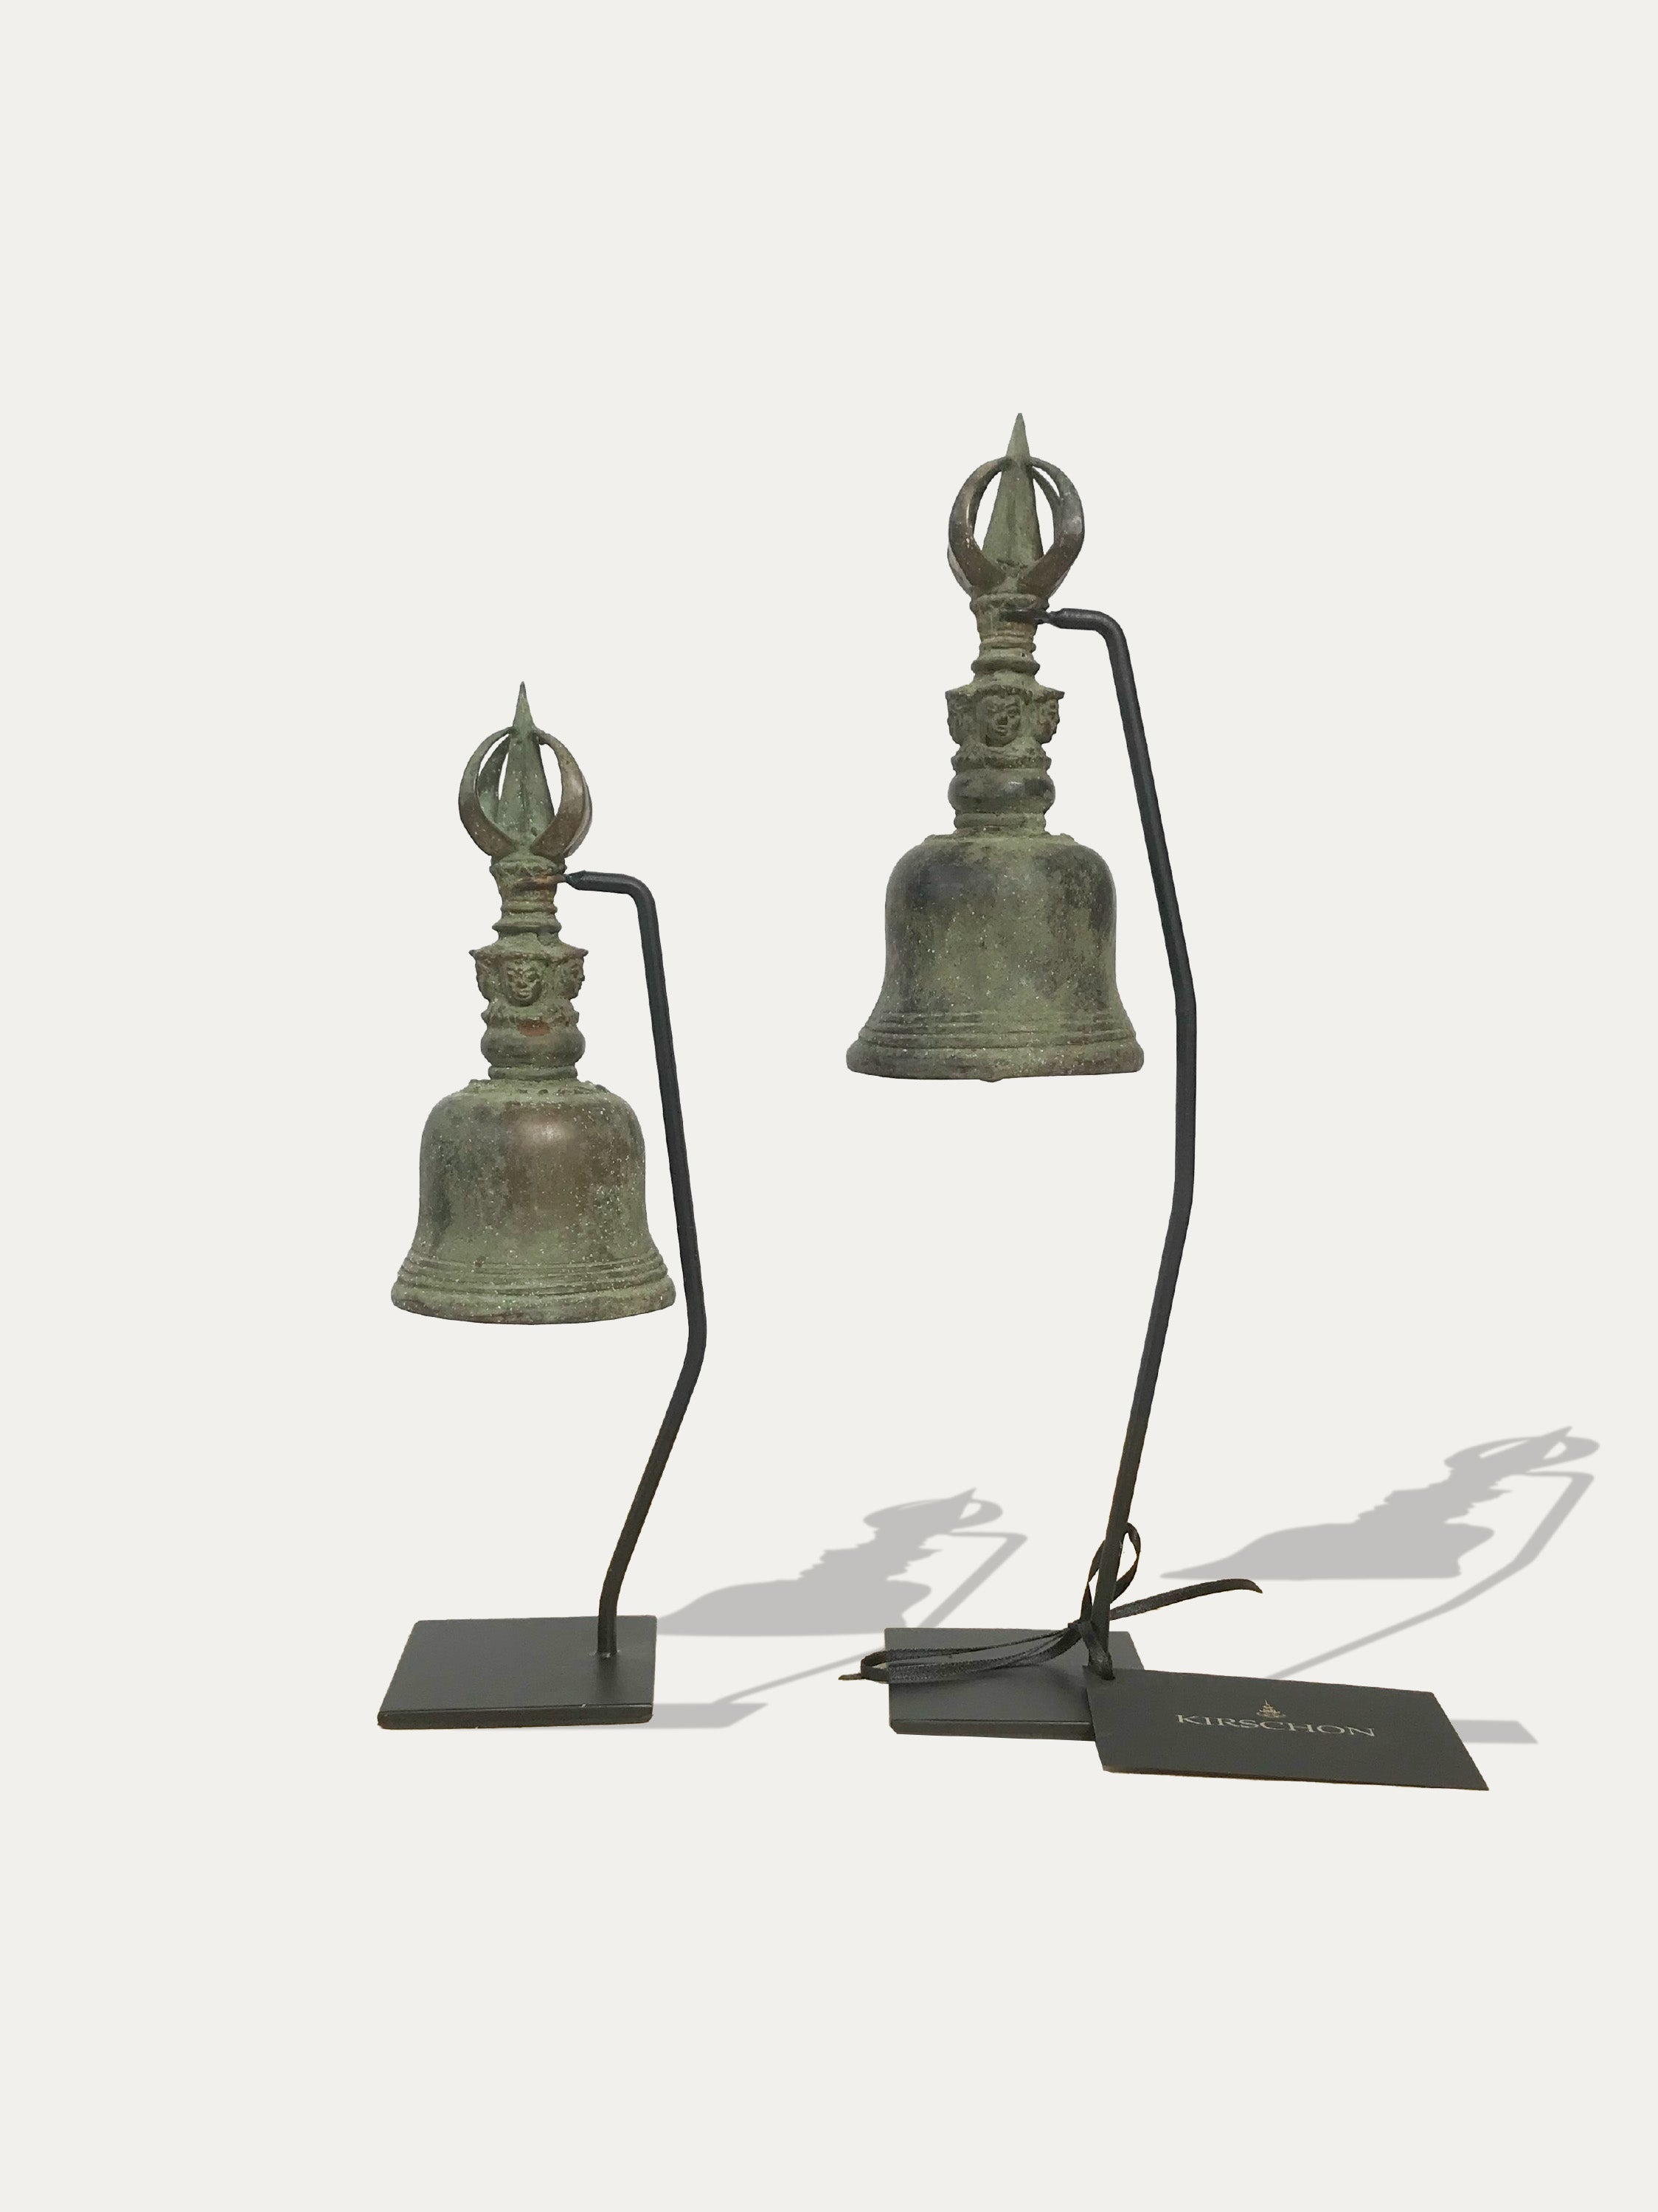 Ceremonial bells from Borneo - Asian Art from Kirschon